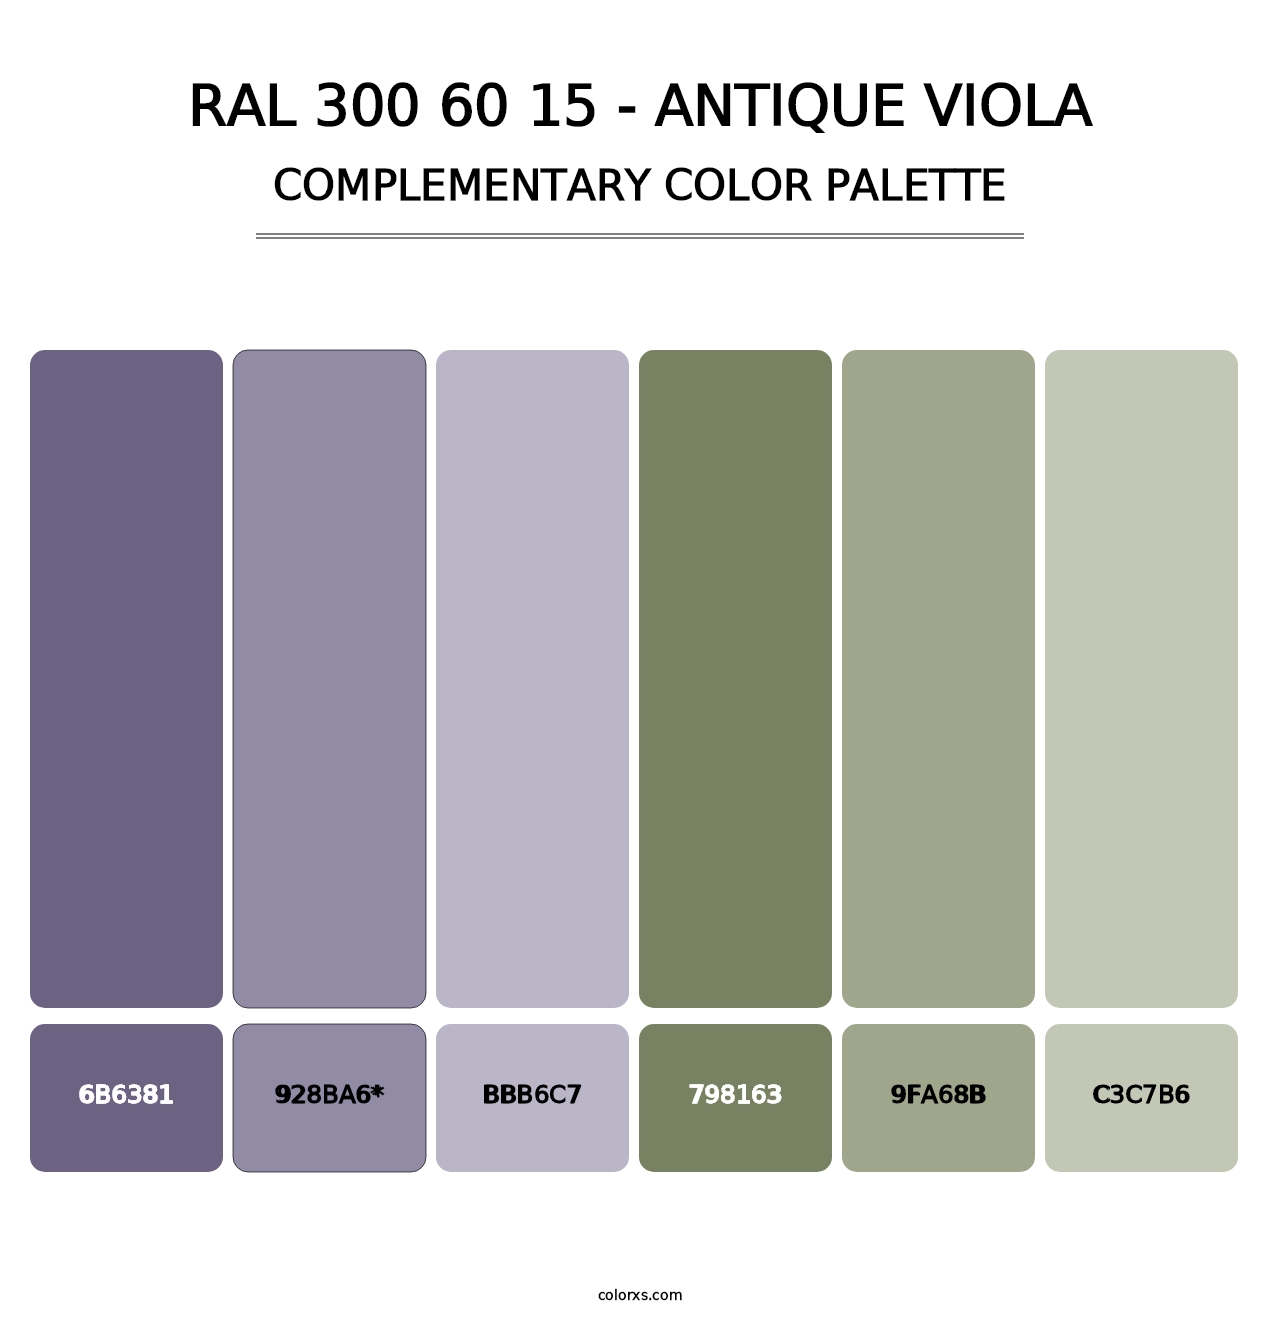 RAL 300 60 15 - Antique Viola - Complementary Color Palette